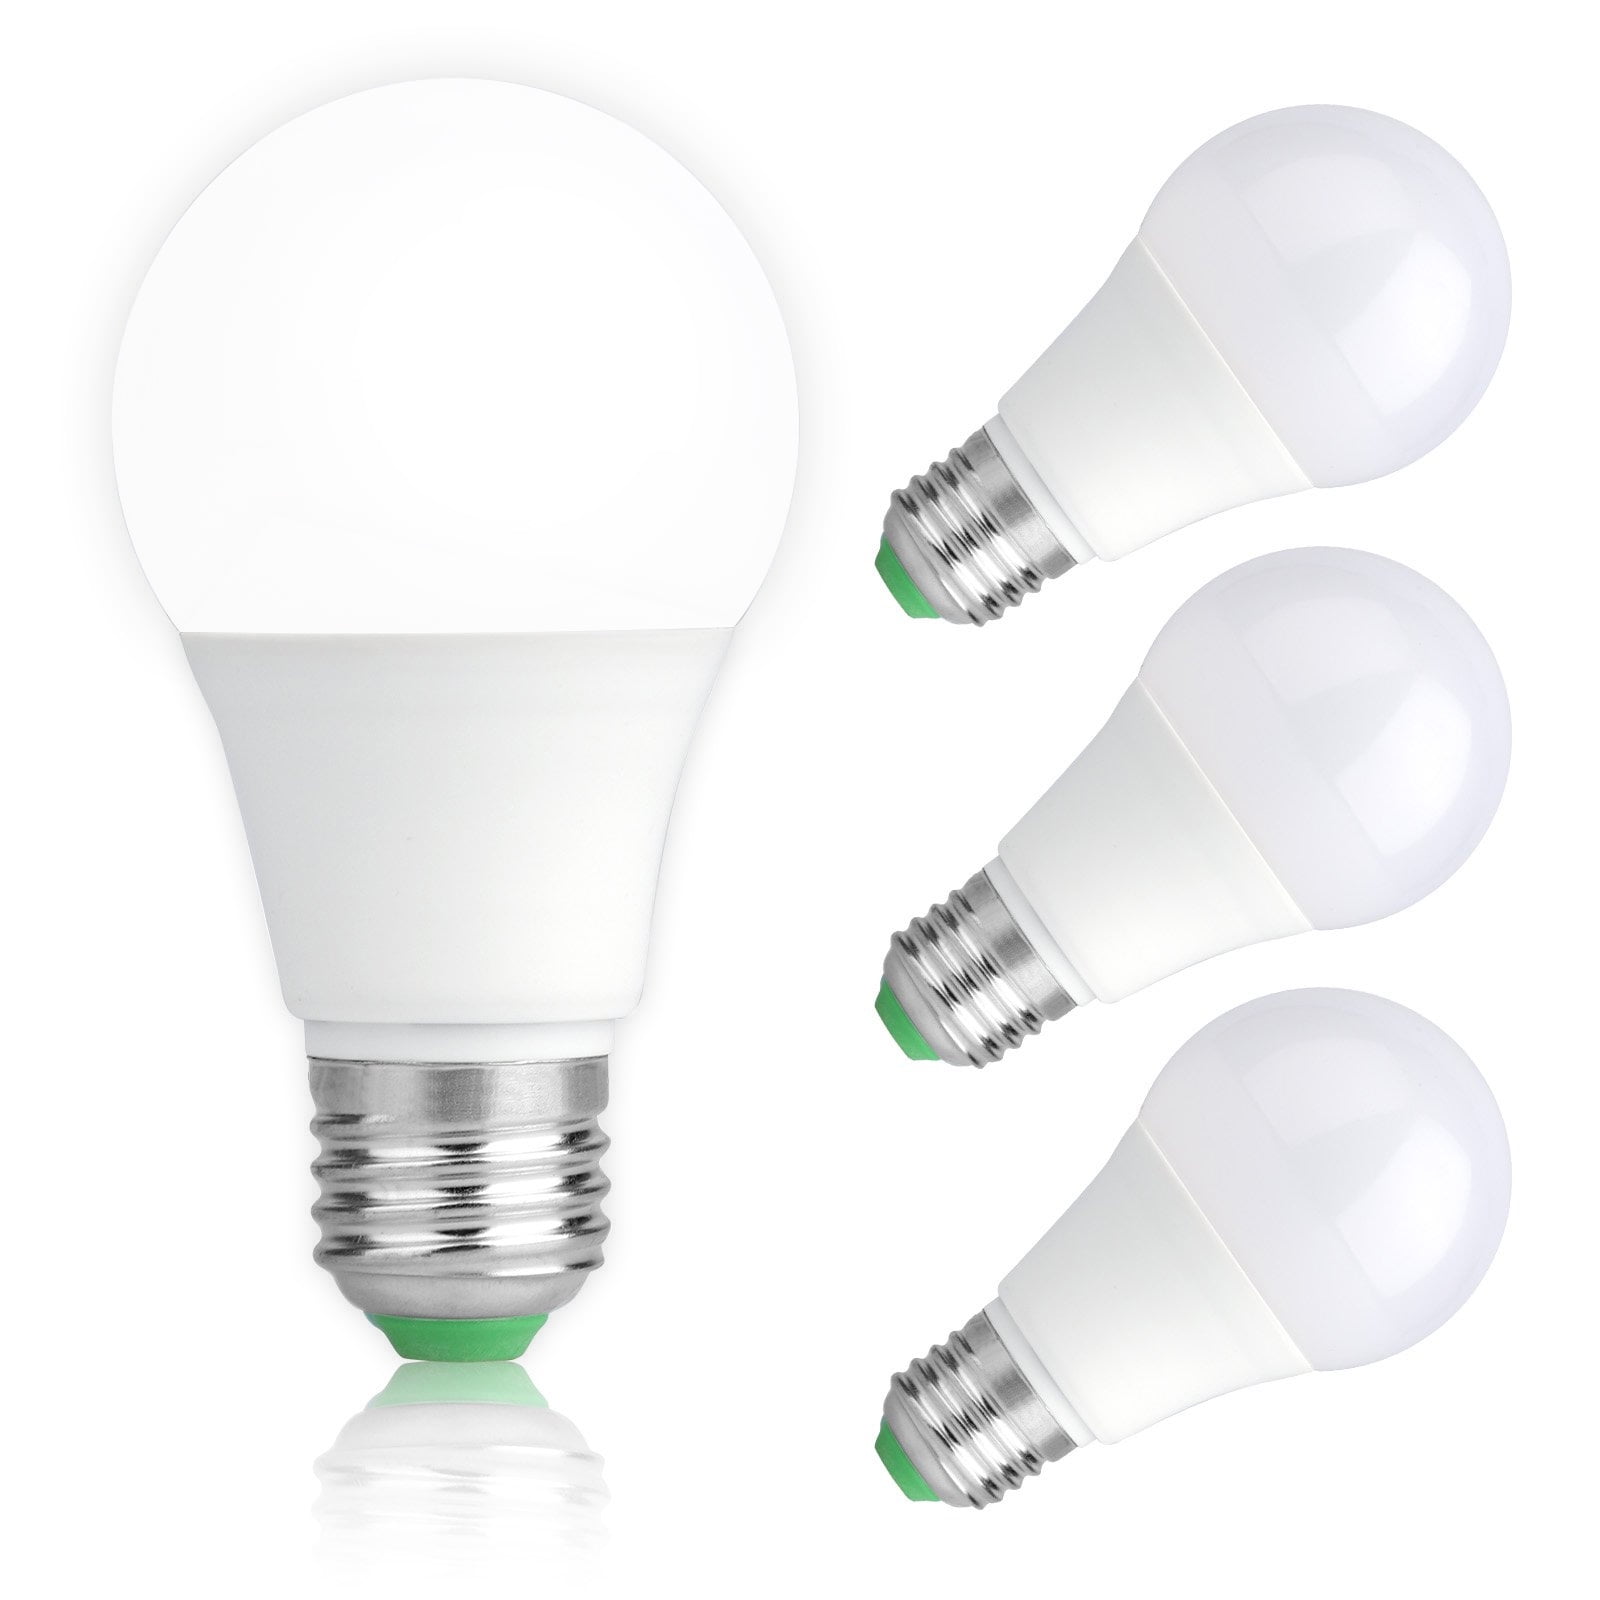 Langt væk Pensioneret Idol A19 LED Light Bulbs, EEEkit 60 Watt Equivalent LED Bulb Light, 6000K Soft  White, 840 Lumen, E26 Standard Base 9W Non-Dimmable Bulbs for Home Bedroom  Office (4pcs) - Walmart.com